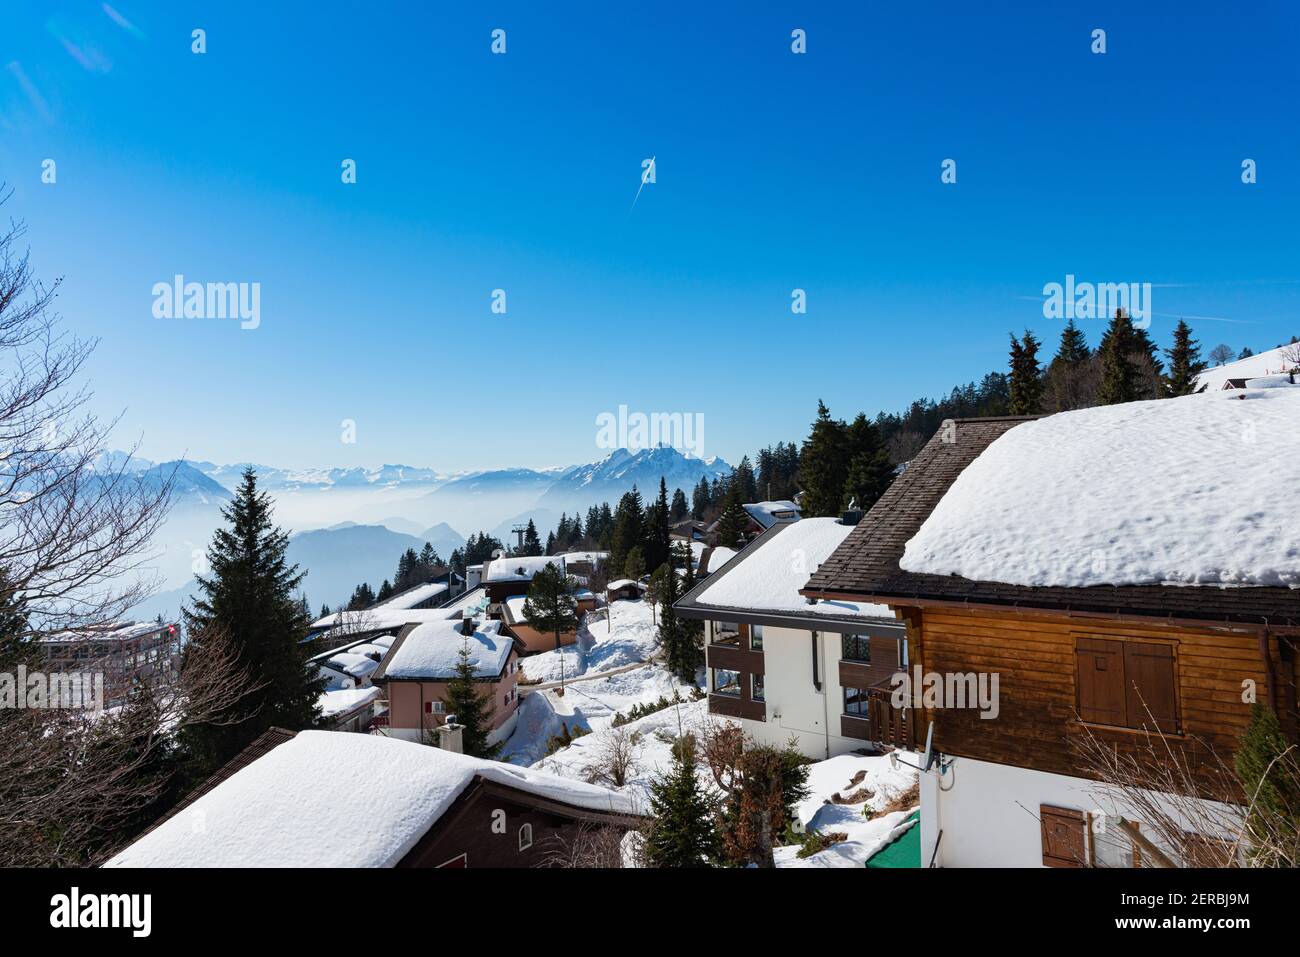 Unique panoramic alpine skyline view of Rigi resort. Snowed Chalets, wooden lodging cabins, hotels, mount Pilatus, blue sky. Mount Rigi, Weggis, Lucer Stock Photo